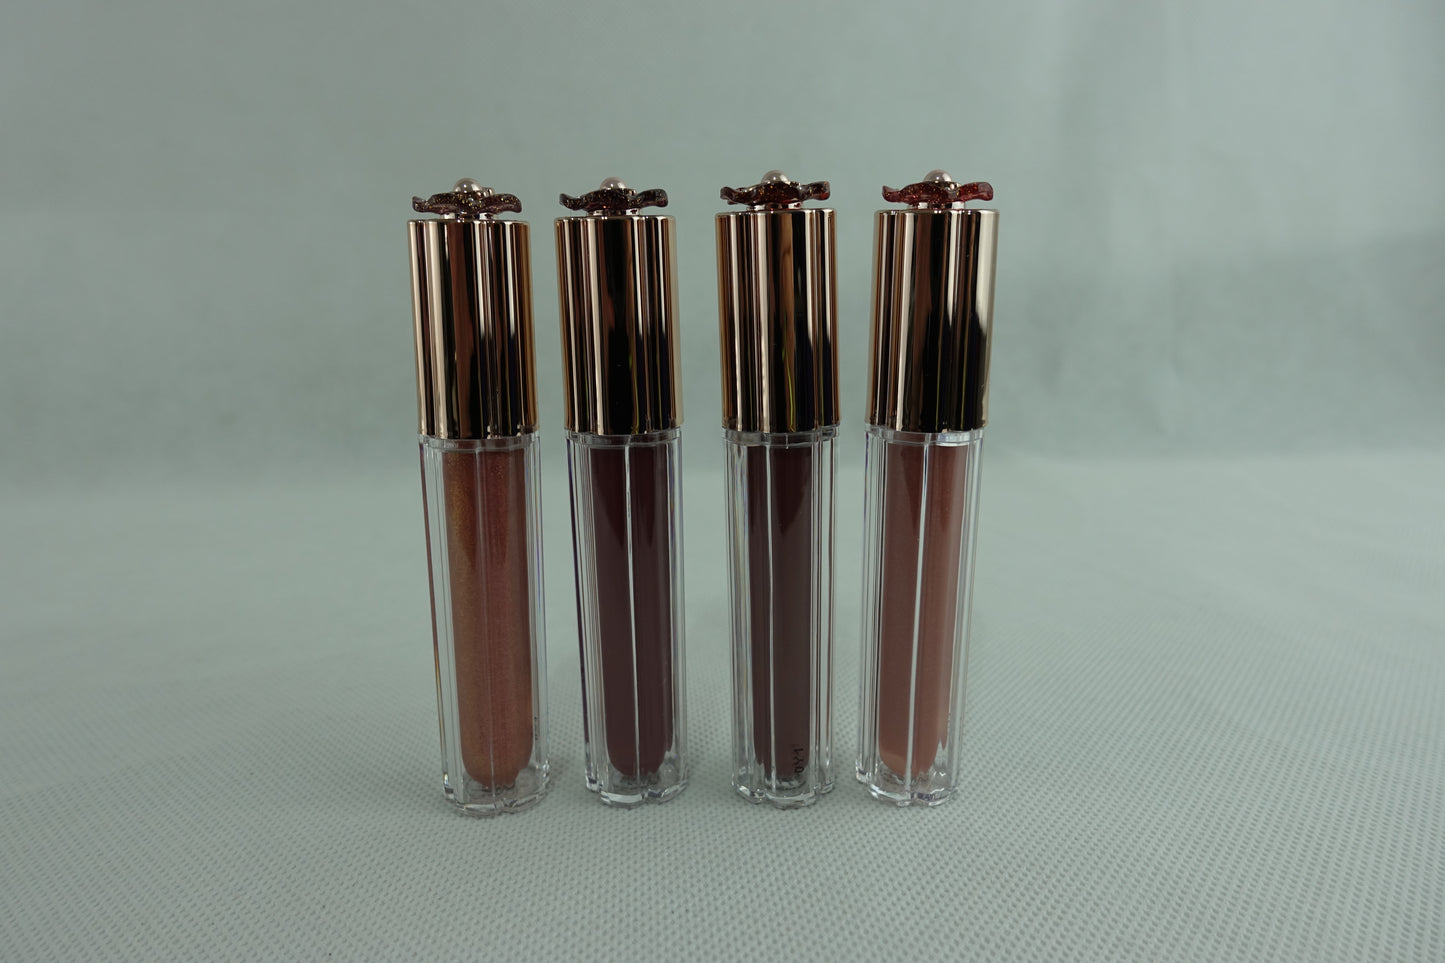 Coach X Sephora Collection Tea Rose Lip Gloss Set